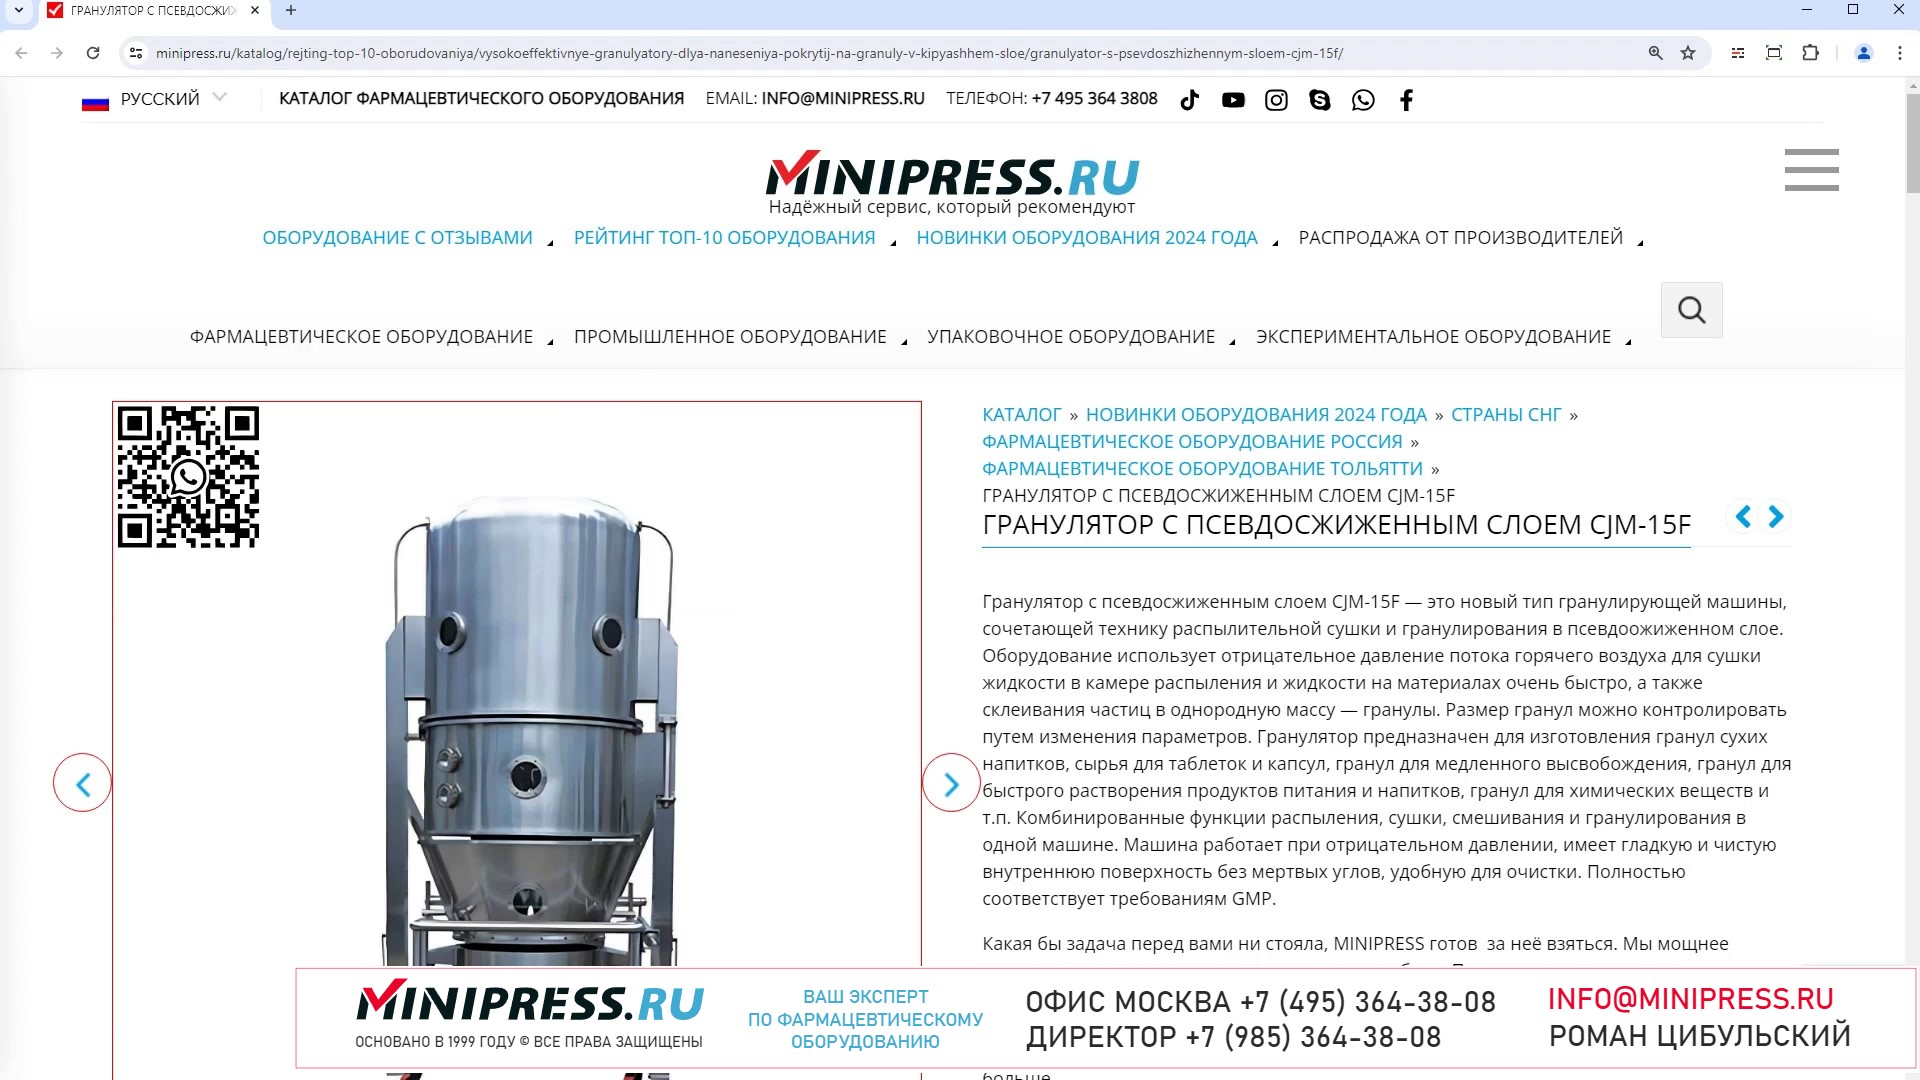 Minipress.ru Гранулятор с псевдосжиженным слоем CJM-15F